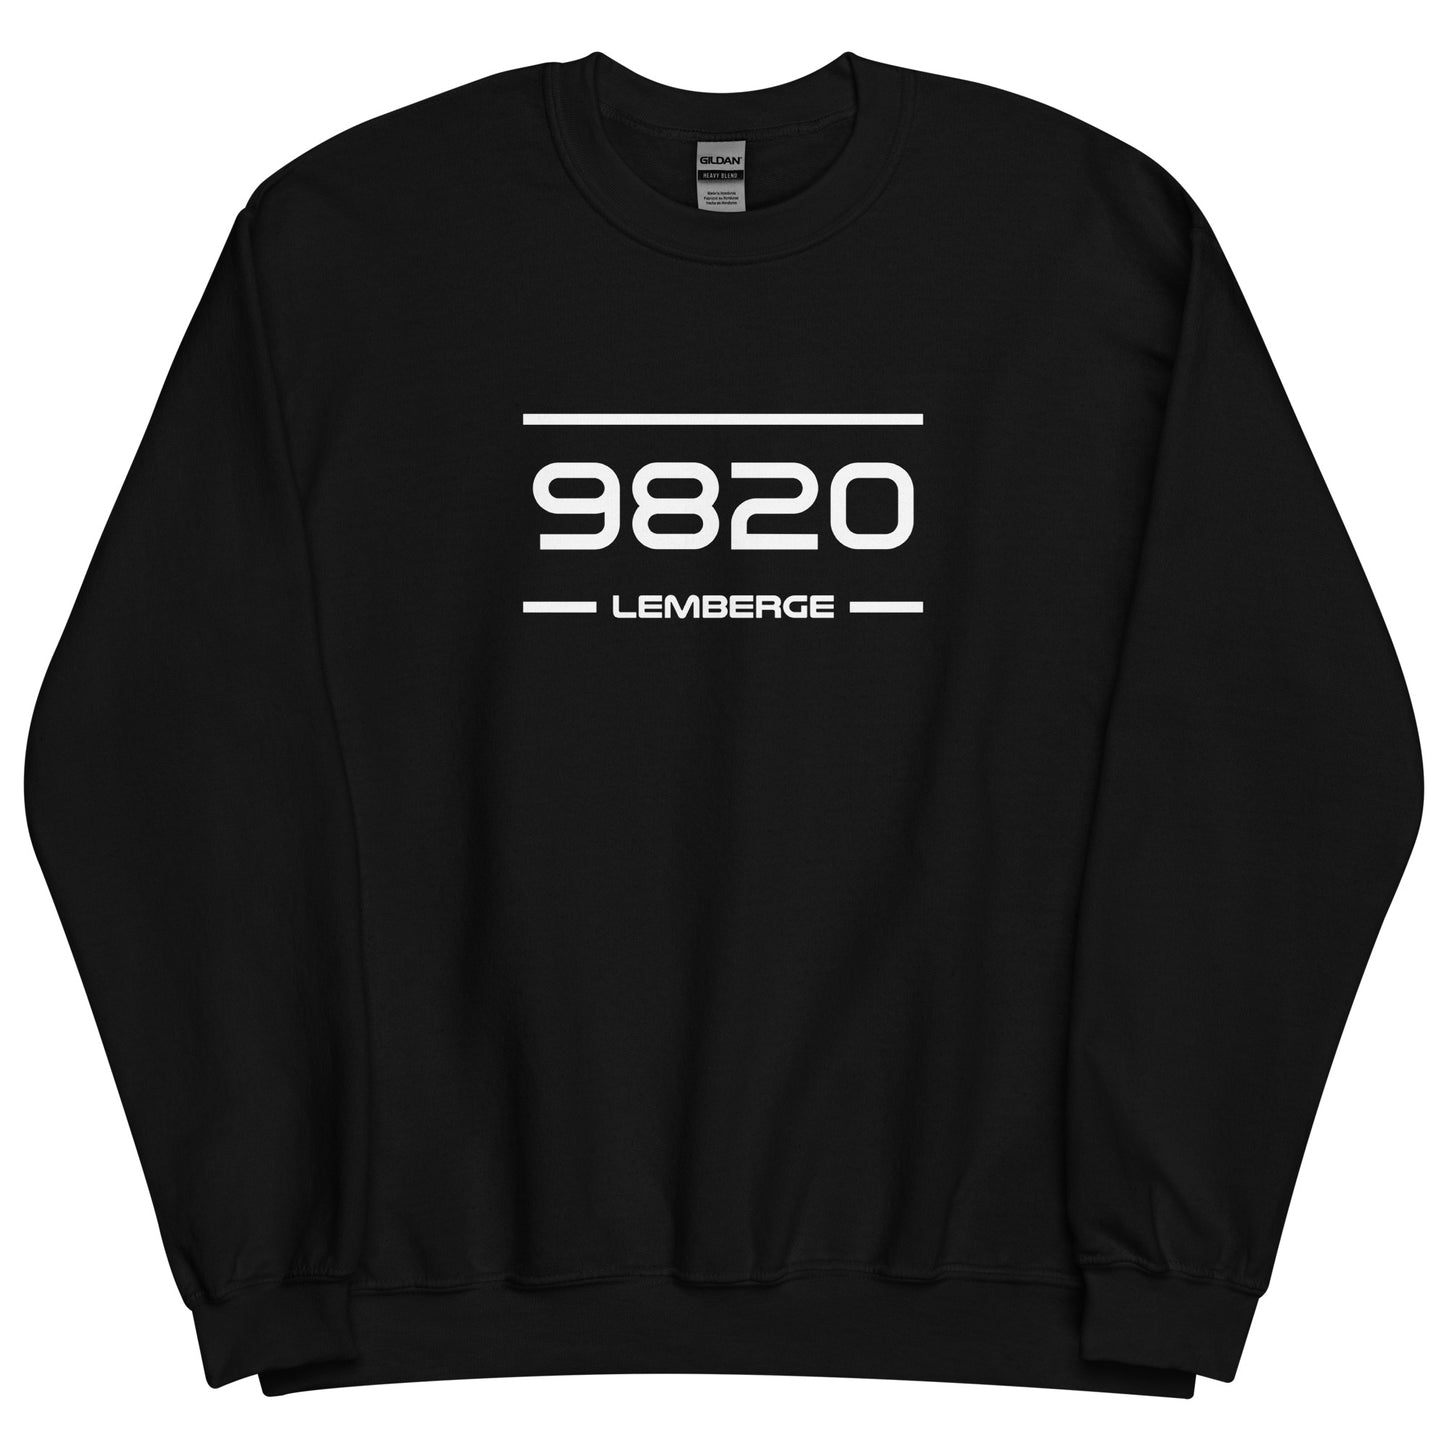 Sweater - 9820 - Lemberge (M/V)